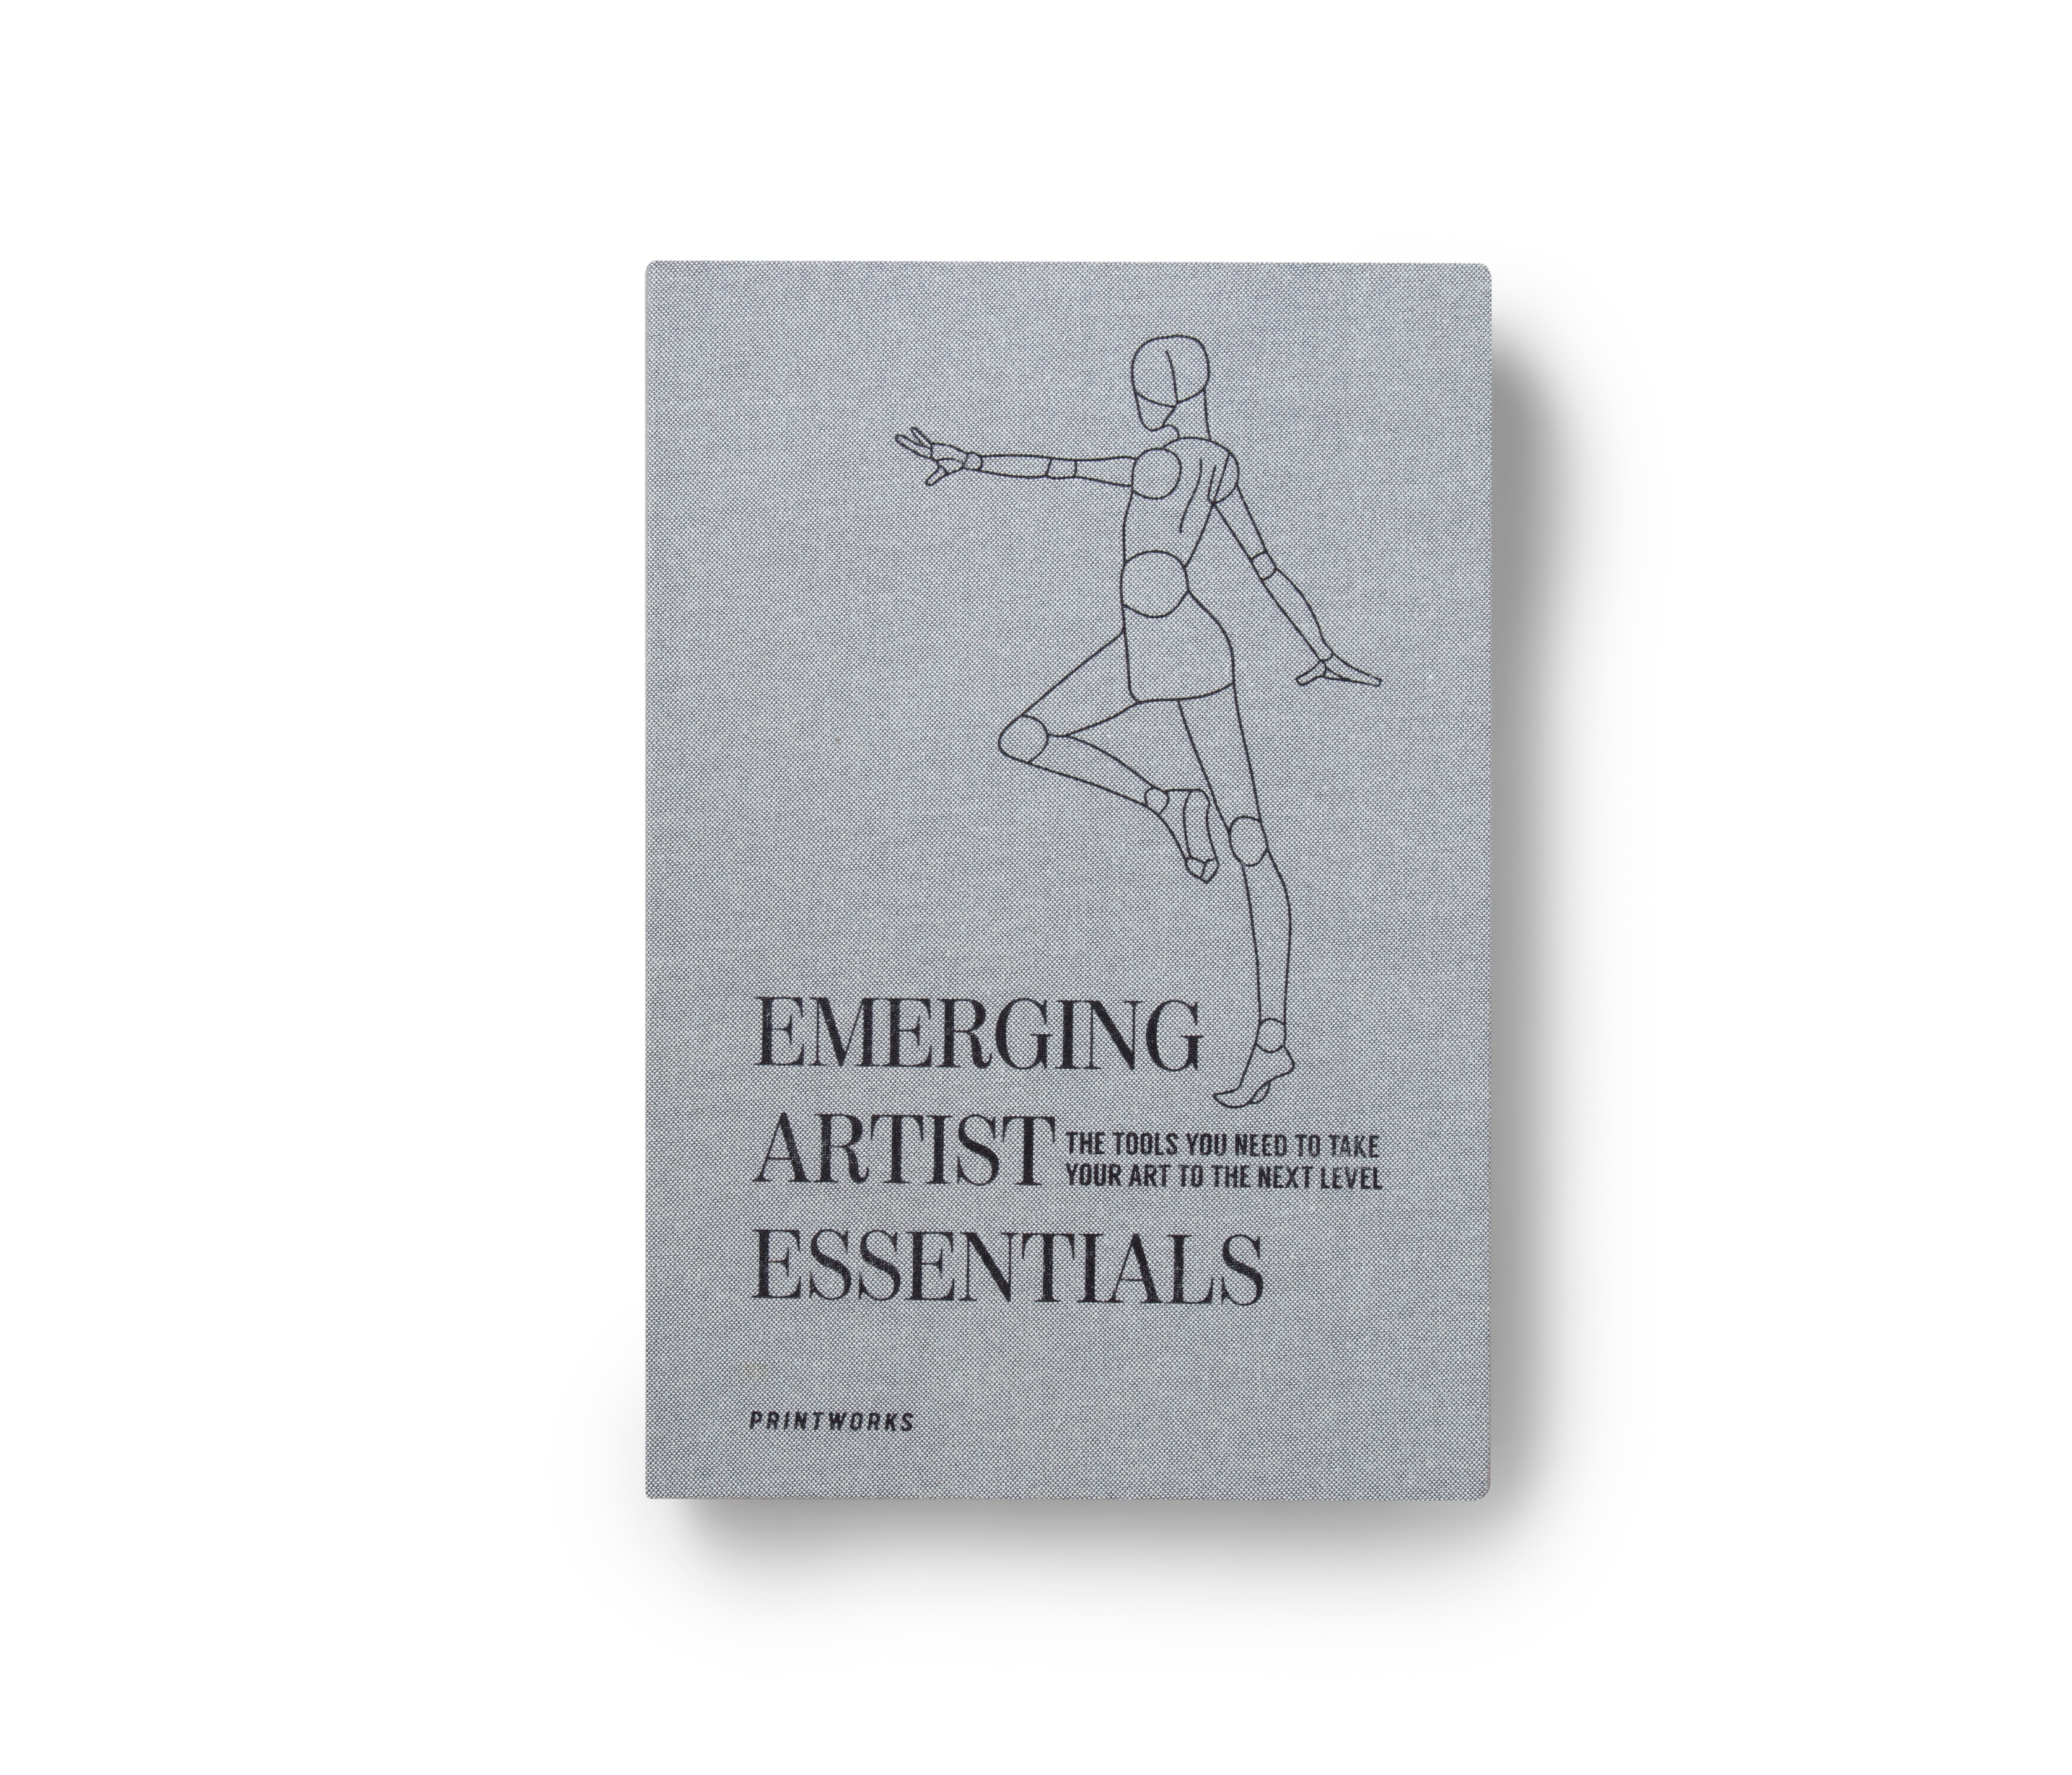 Emerging Artist - Skissbox